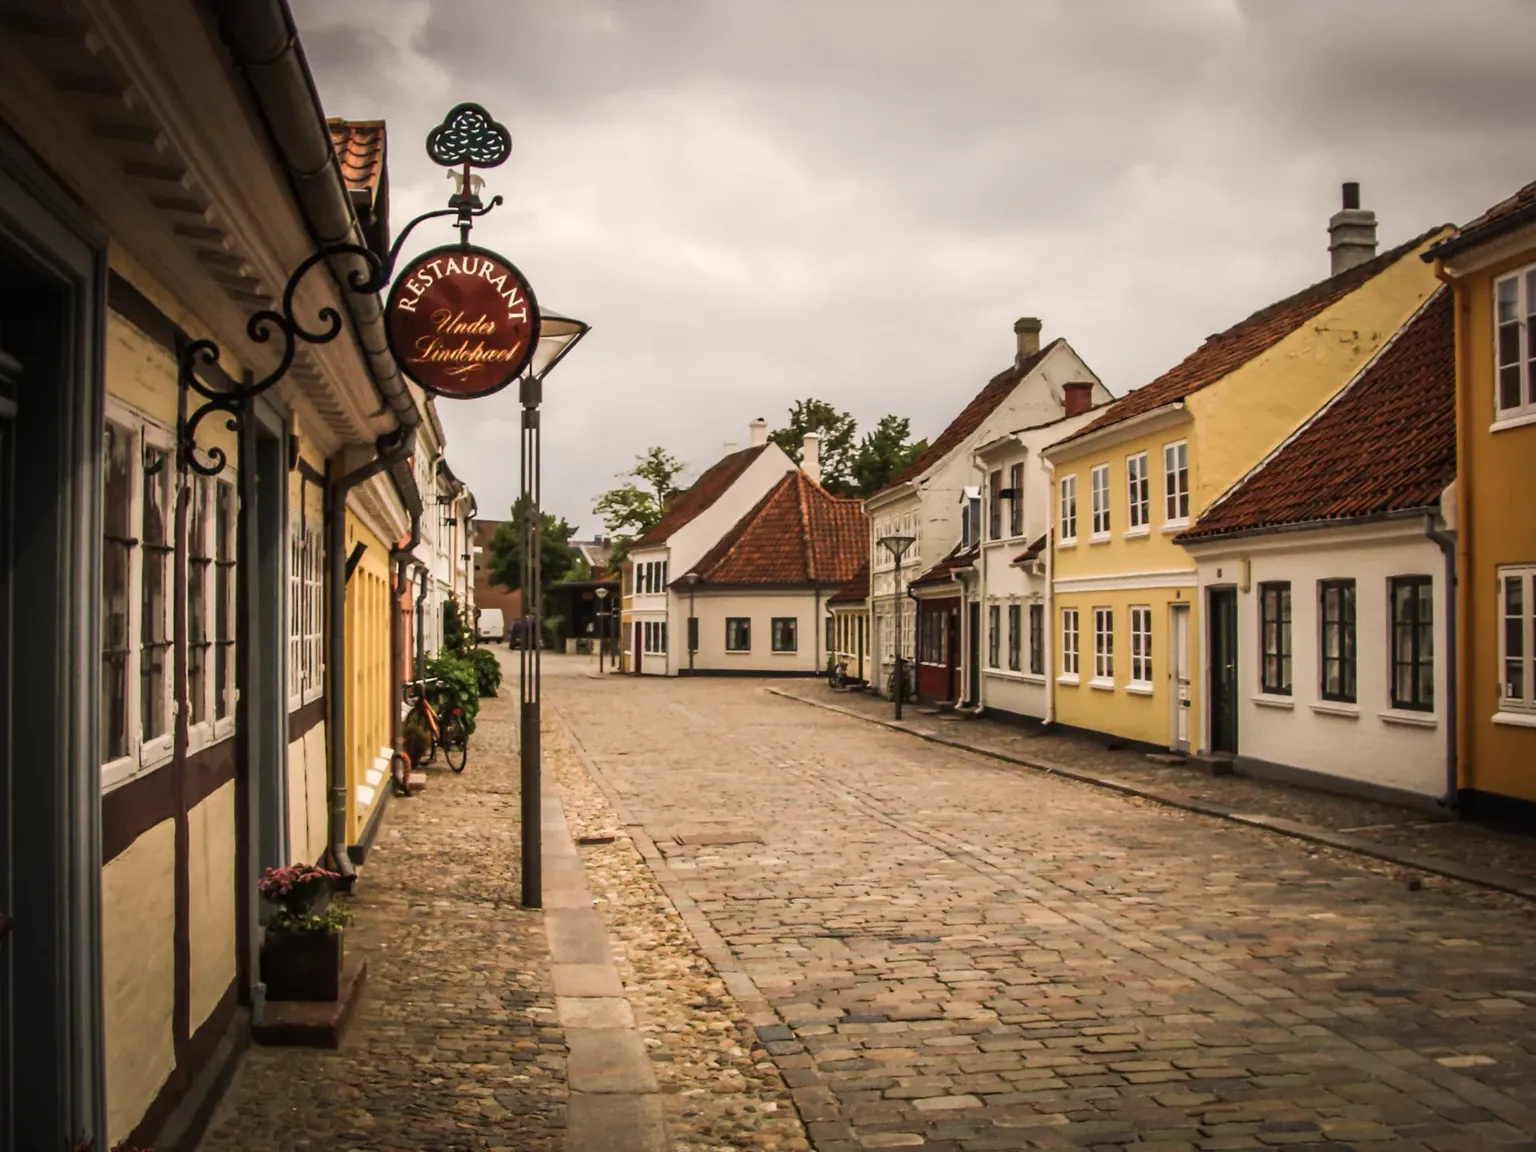 Odense | Southern Denmark Region, Denmark - Rated 5